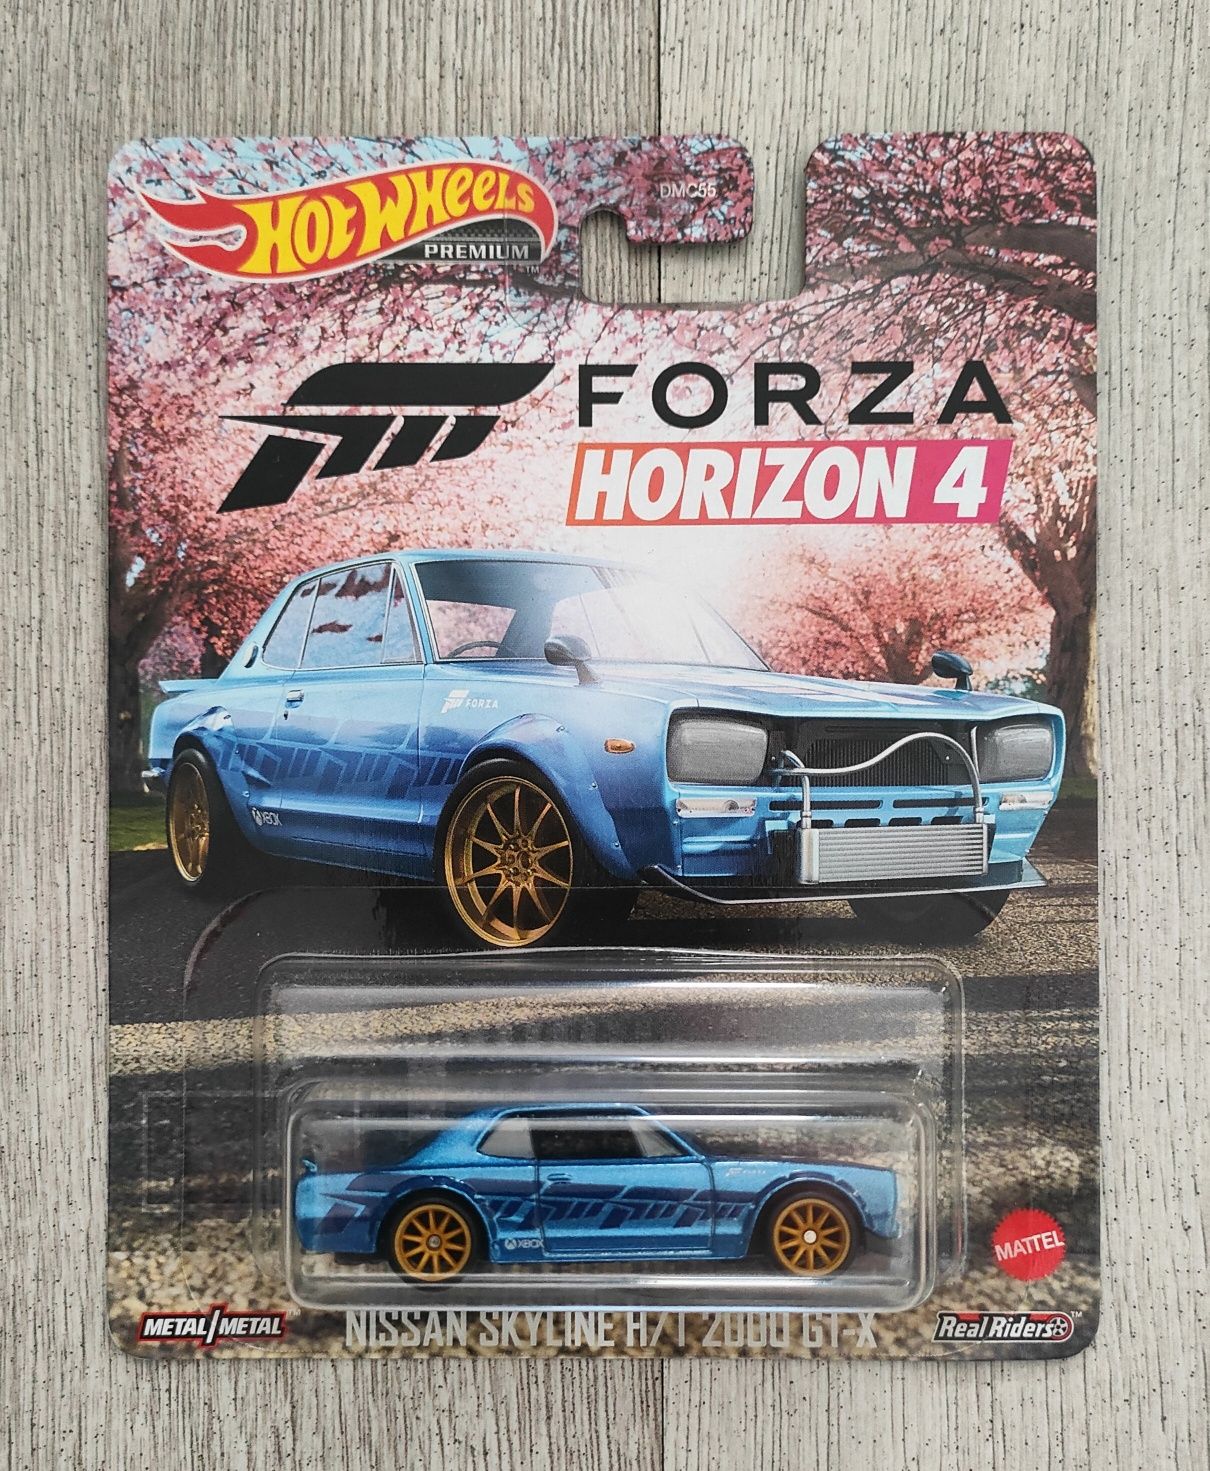 Hot wheels Nissan Skyline H/T 2000 GT-X Forza Horizon 4